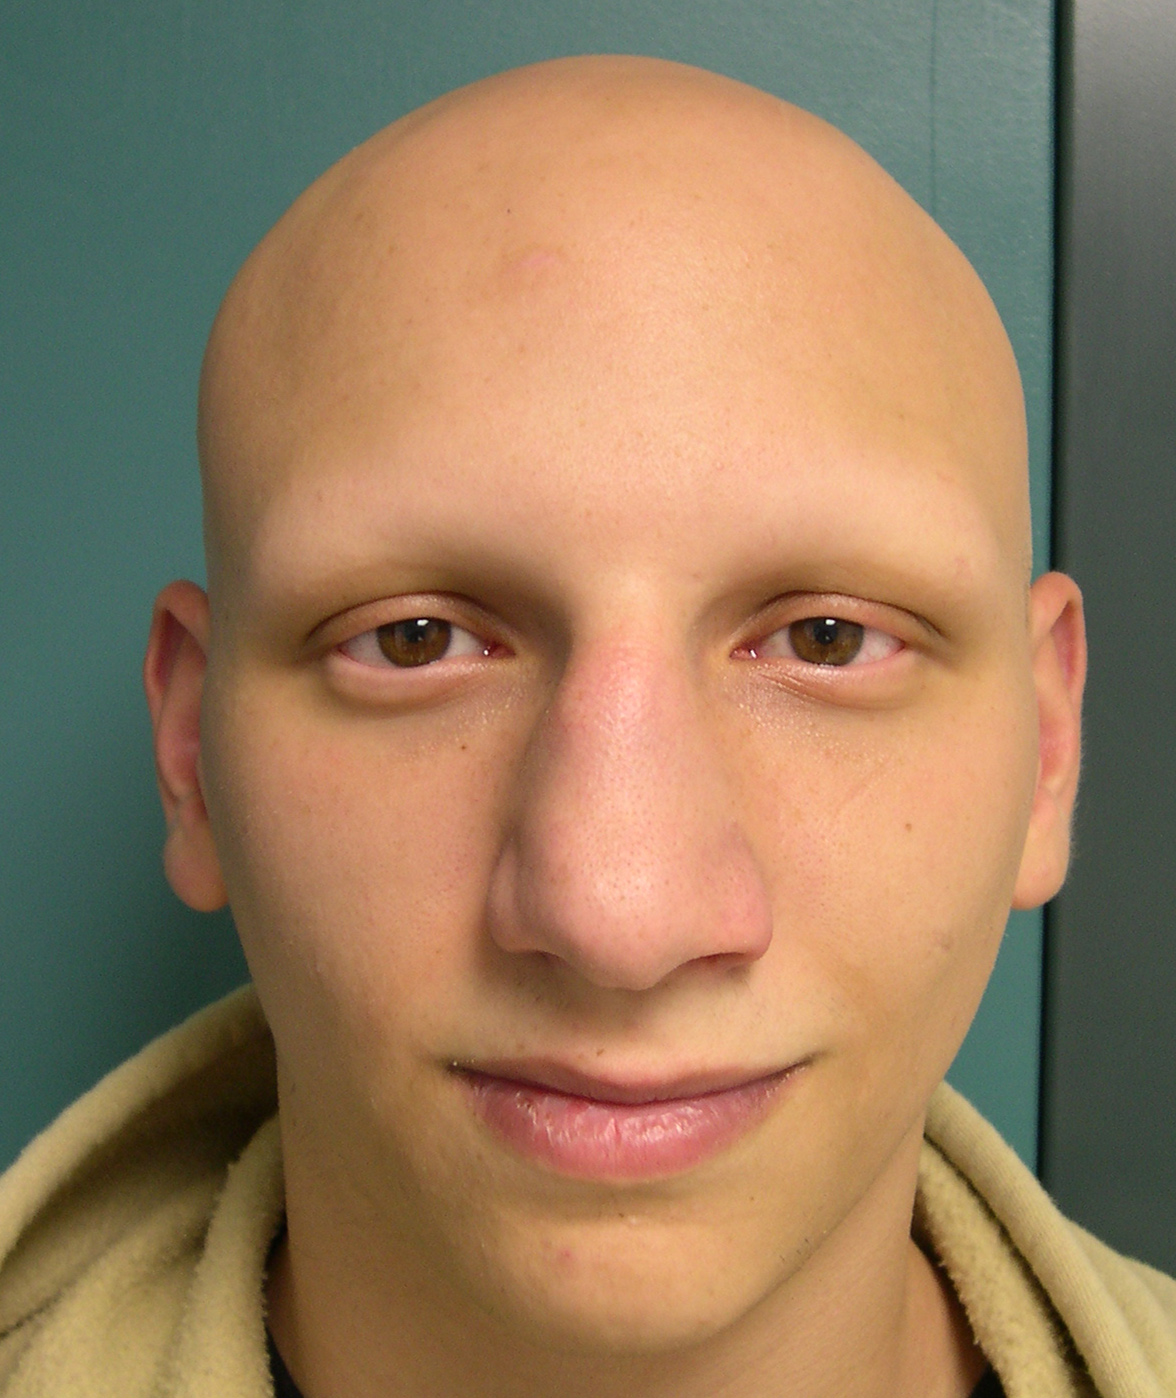 Alopecia Totalis Symptoms Causes And Treatment